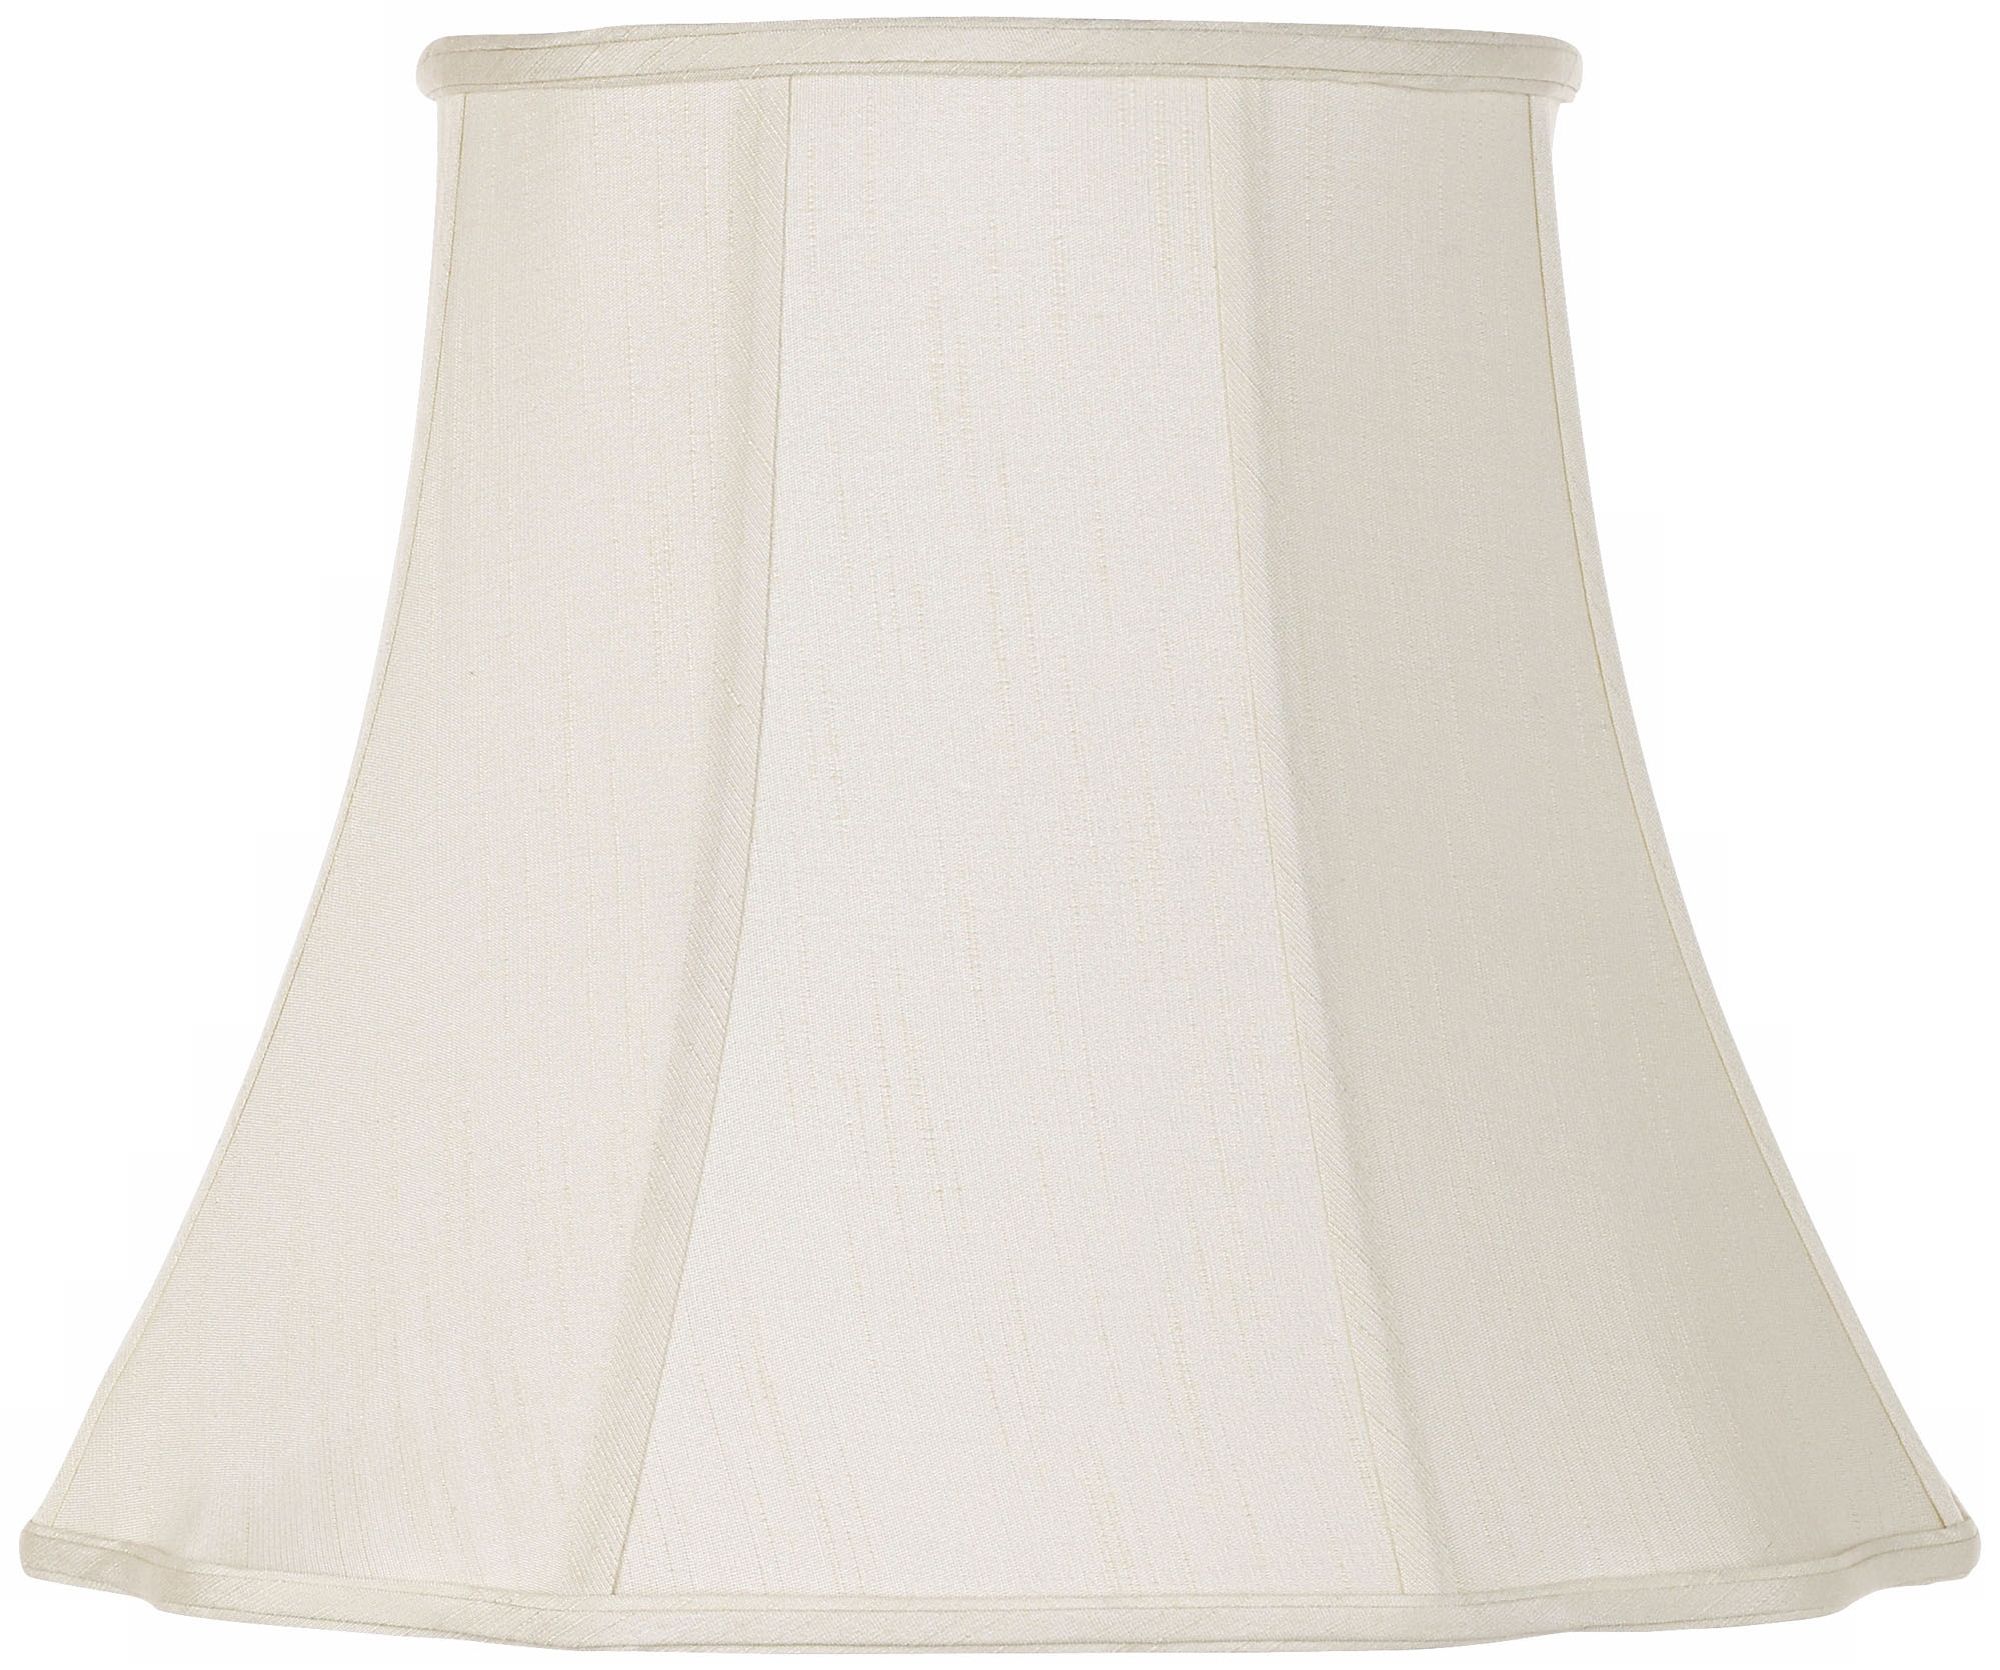 large cream table lamp shades